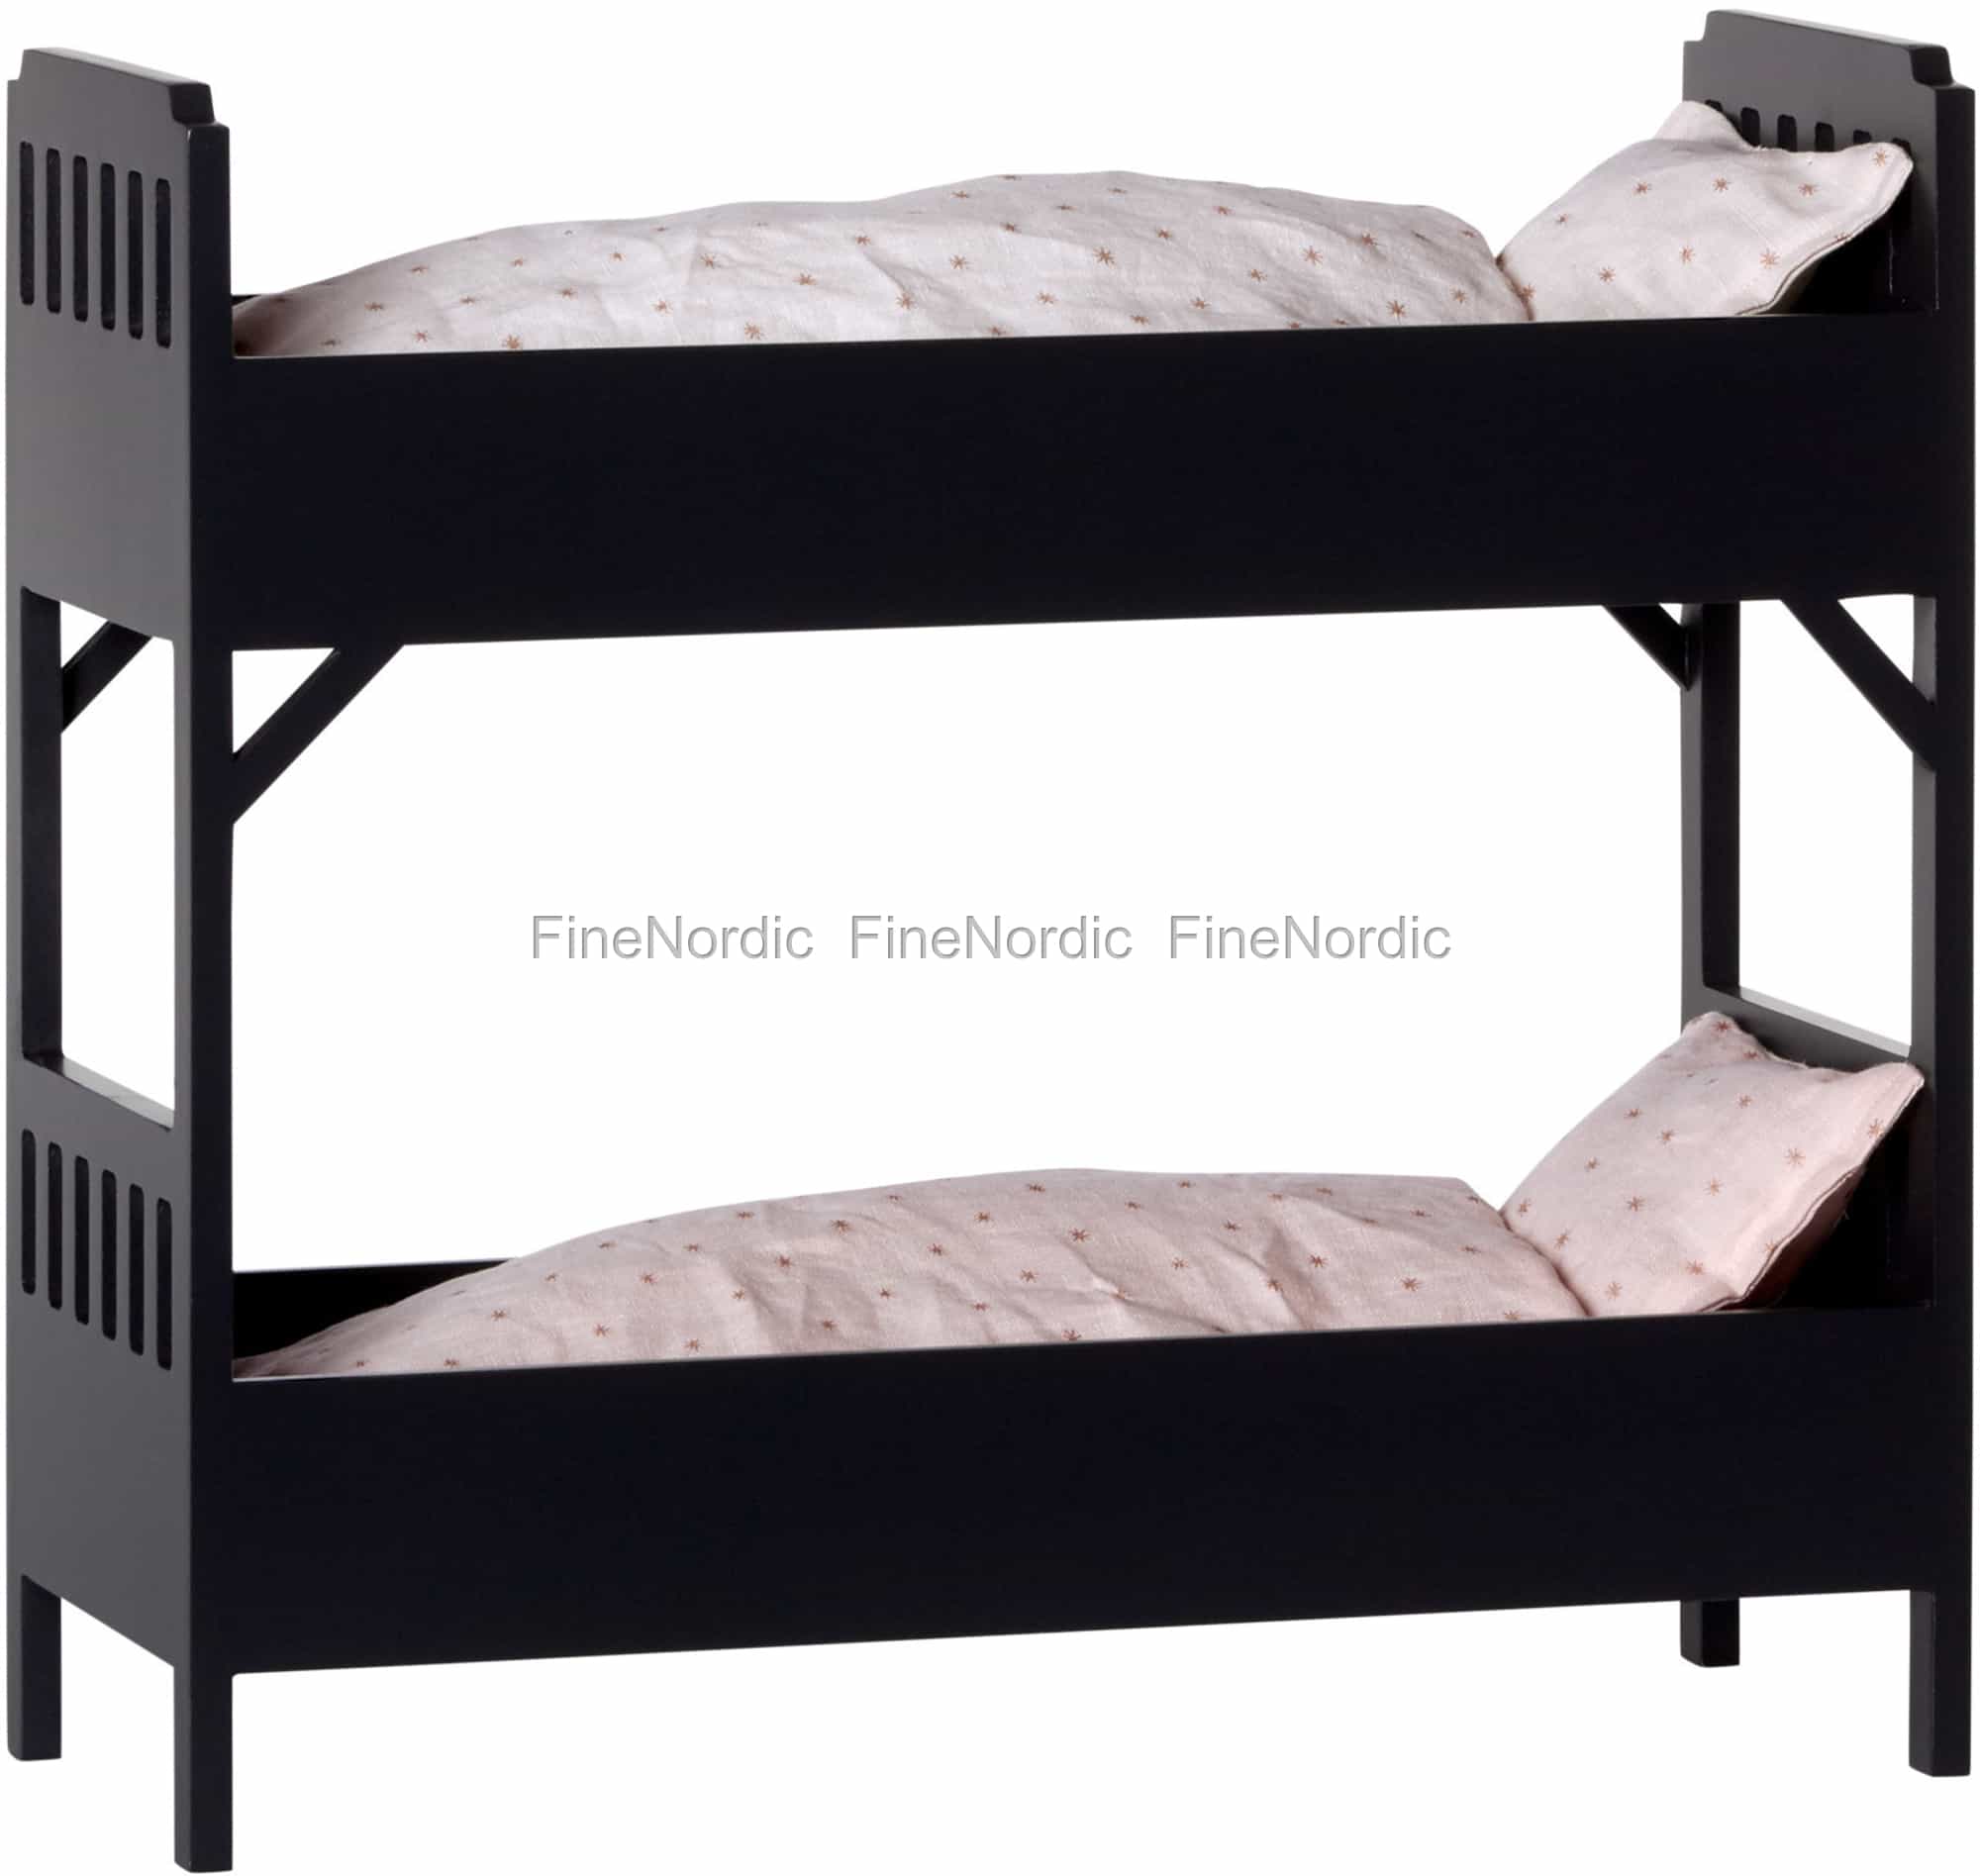 Maileg Rabbit Bunk Bed Large Black, Large Doll Bunk Beds